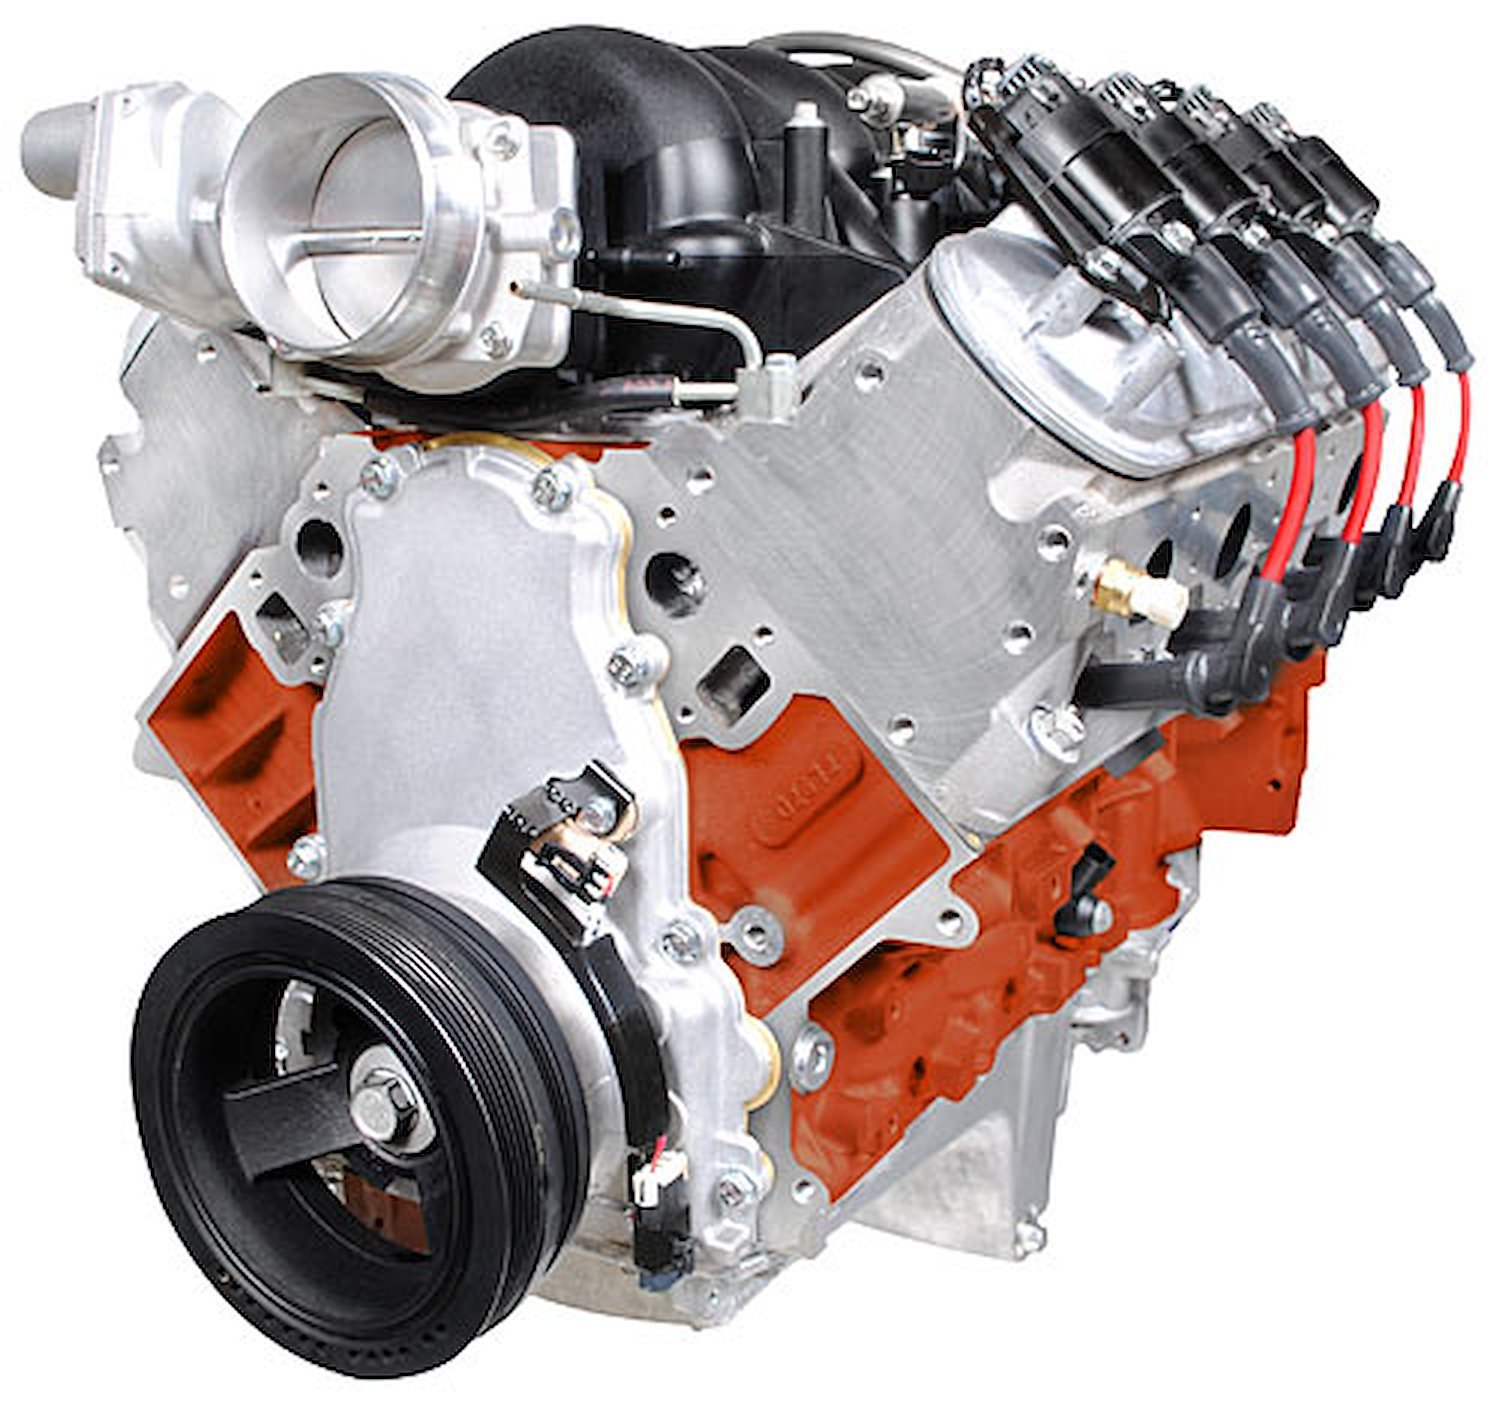 GM LS 427ci Dress Retrofit FI Engine, Fuel Injected